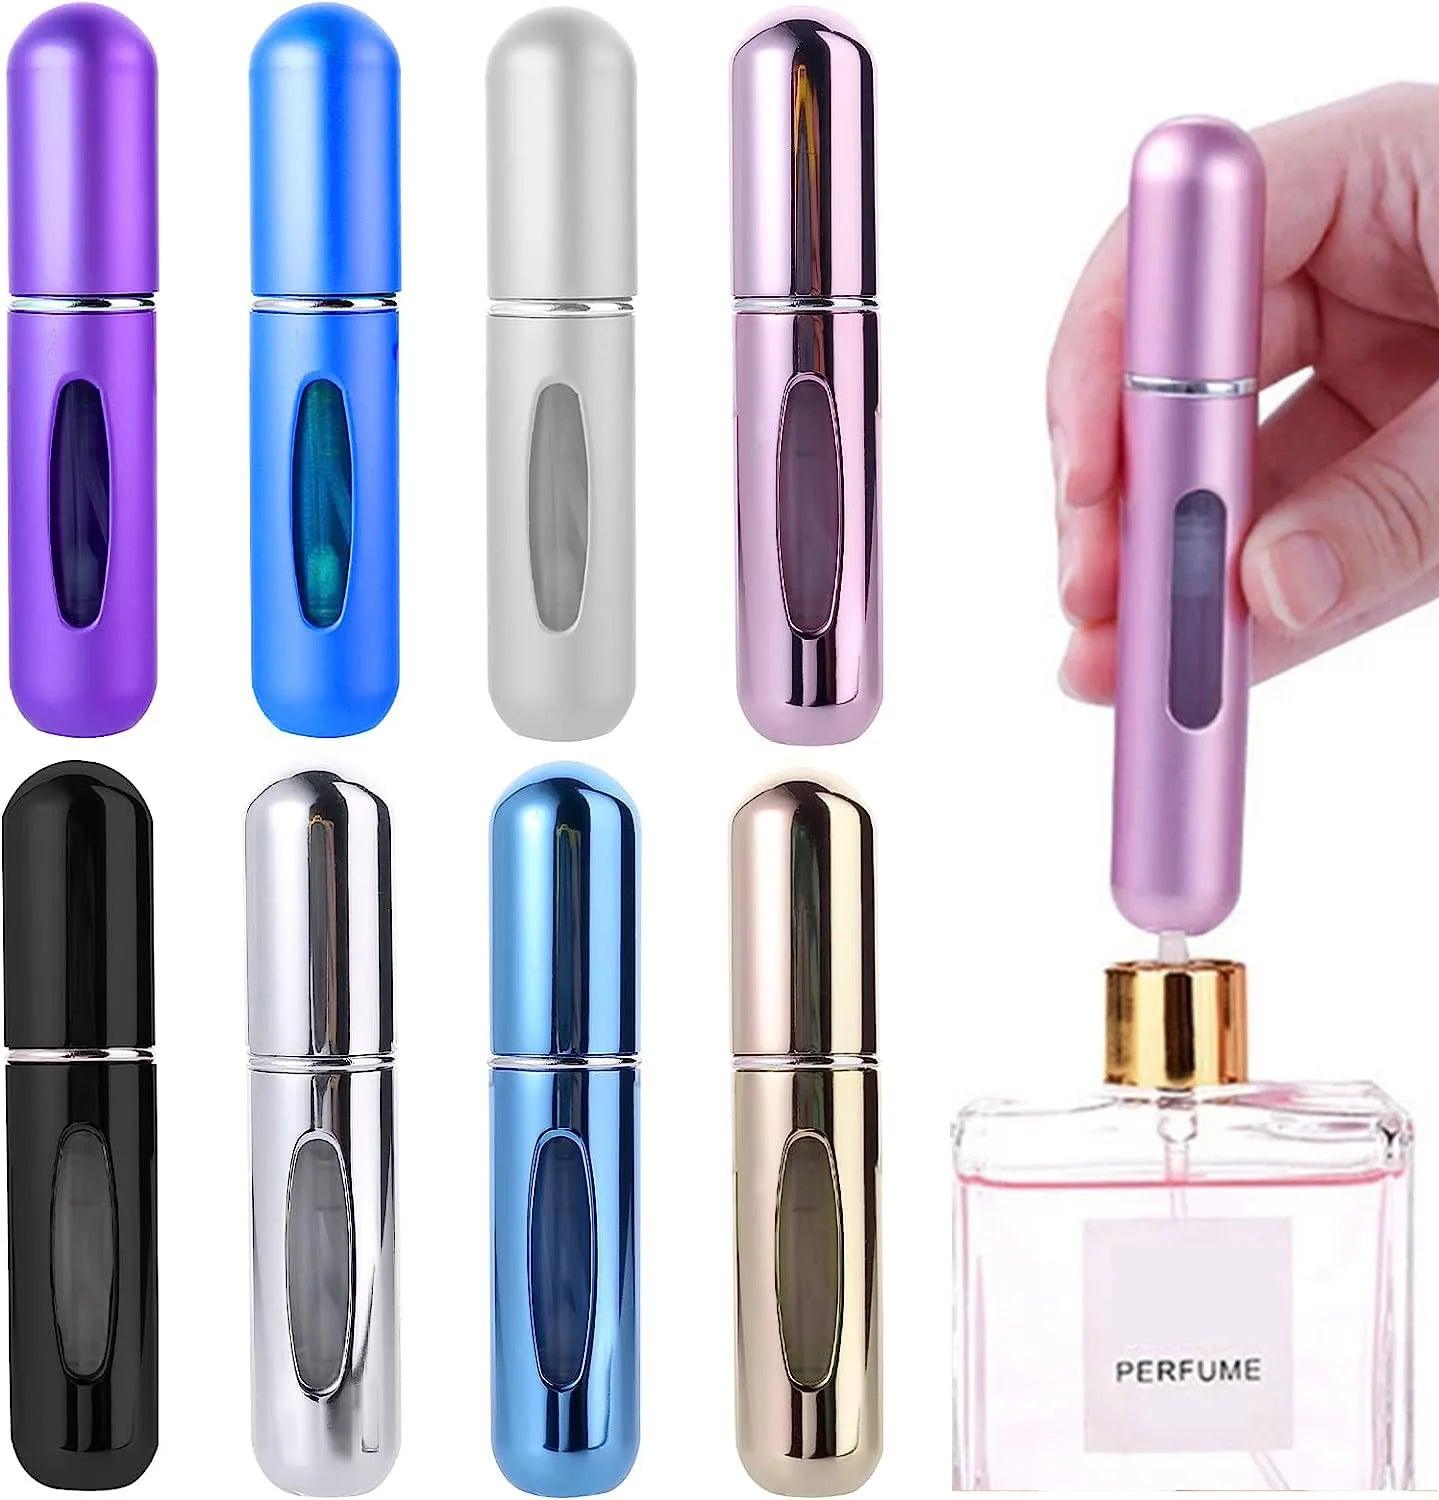 Mini Perfume Atomizer: Travel-Sized Fragrance Spray Bottle 8ml/5ml  ourlum.com   